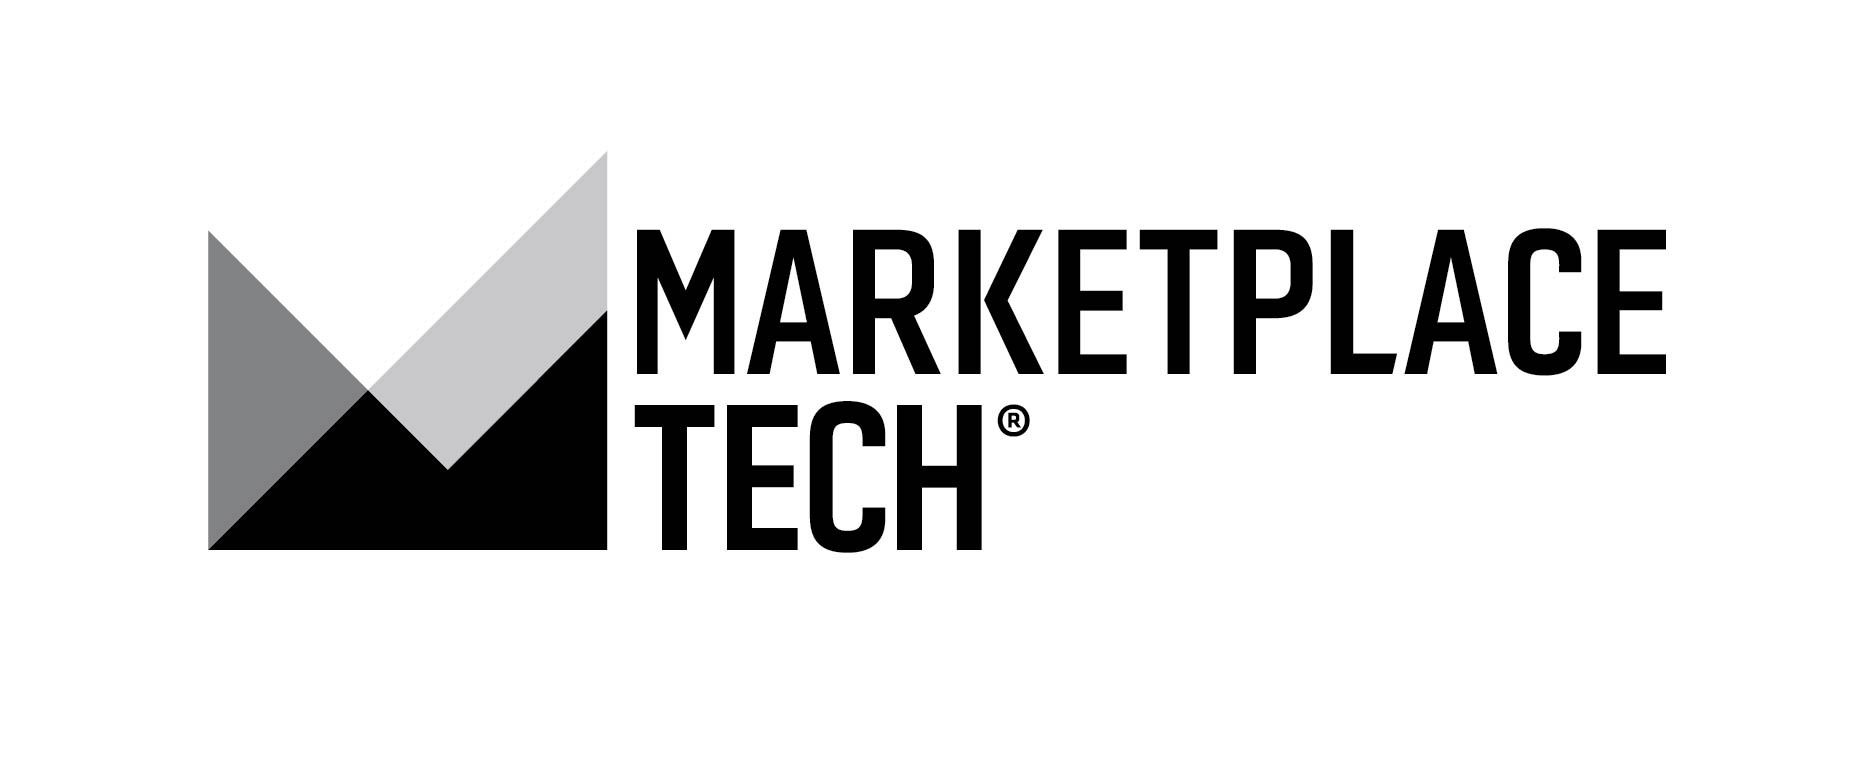 Marketplace Tech Report Logo - 4